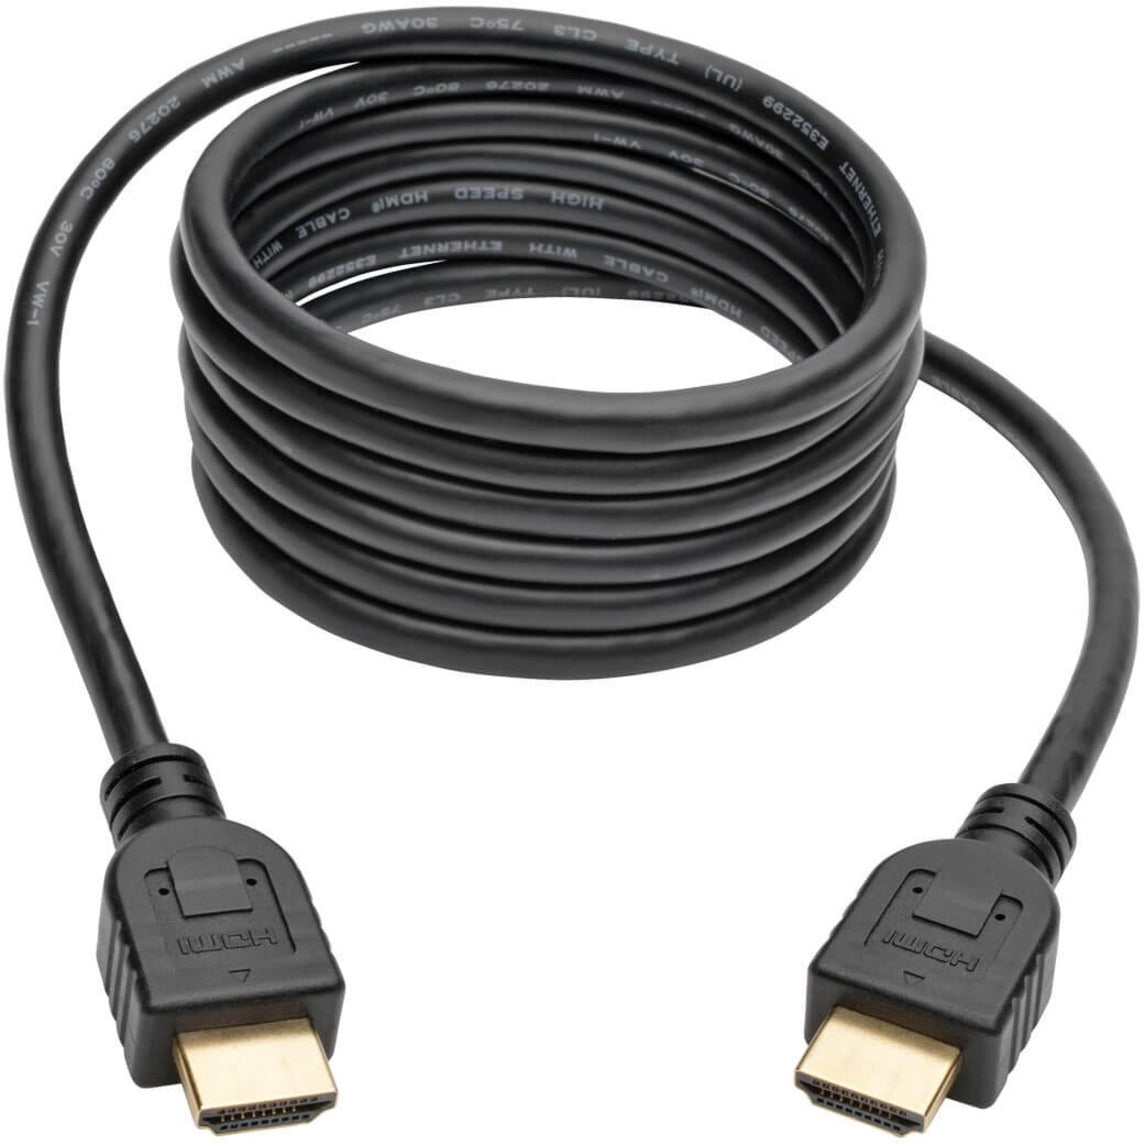 Tripp Lite P569-010-CL3 HDMI Audio/Video Cable, 10 ft, UHD 4K x 2K, Gold Plated, Lifetime Warranty